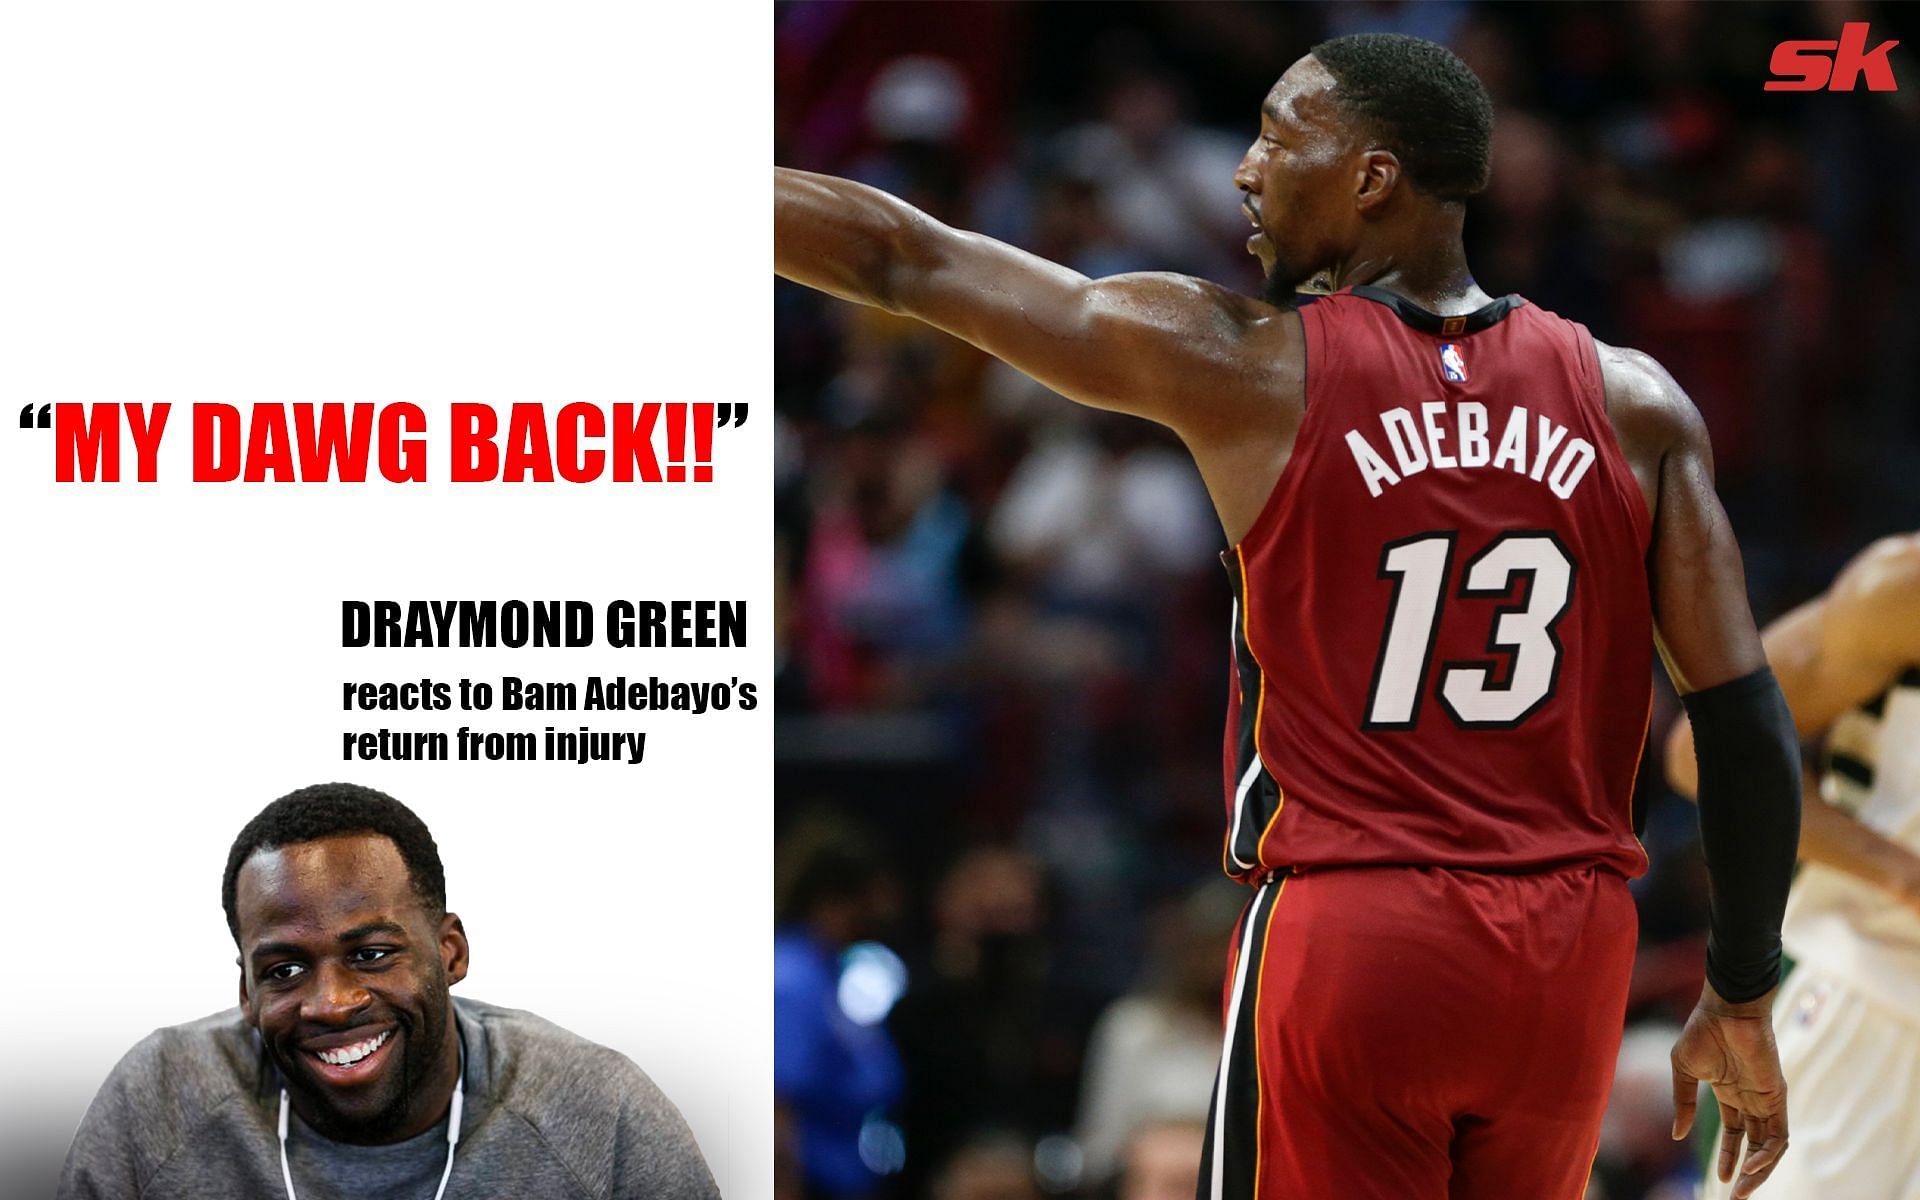 Warriors forward Draymond Green praises the return of Miami Heat big man Bam Adebayo